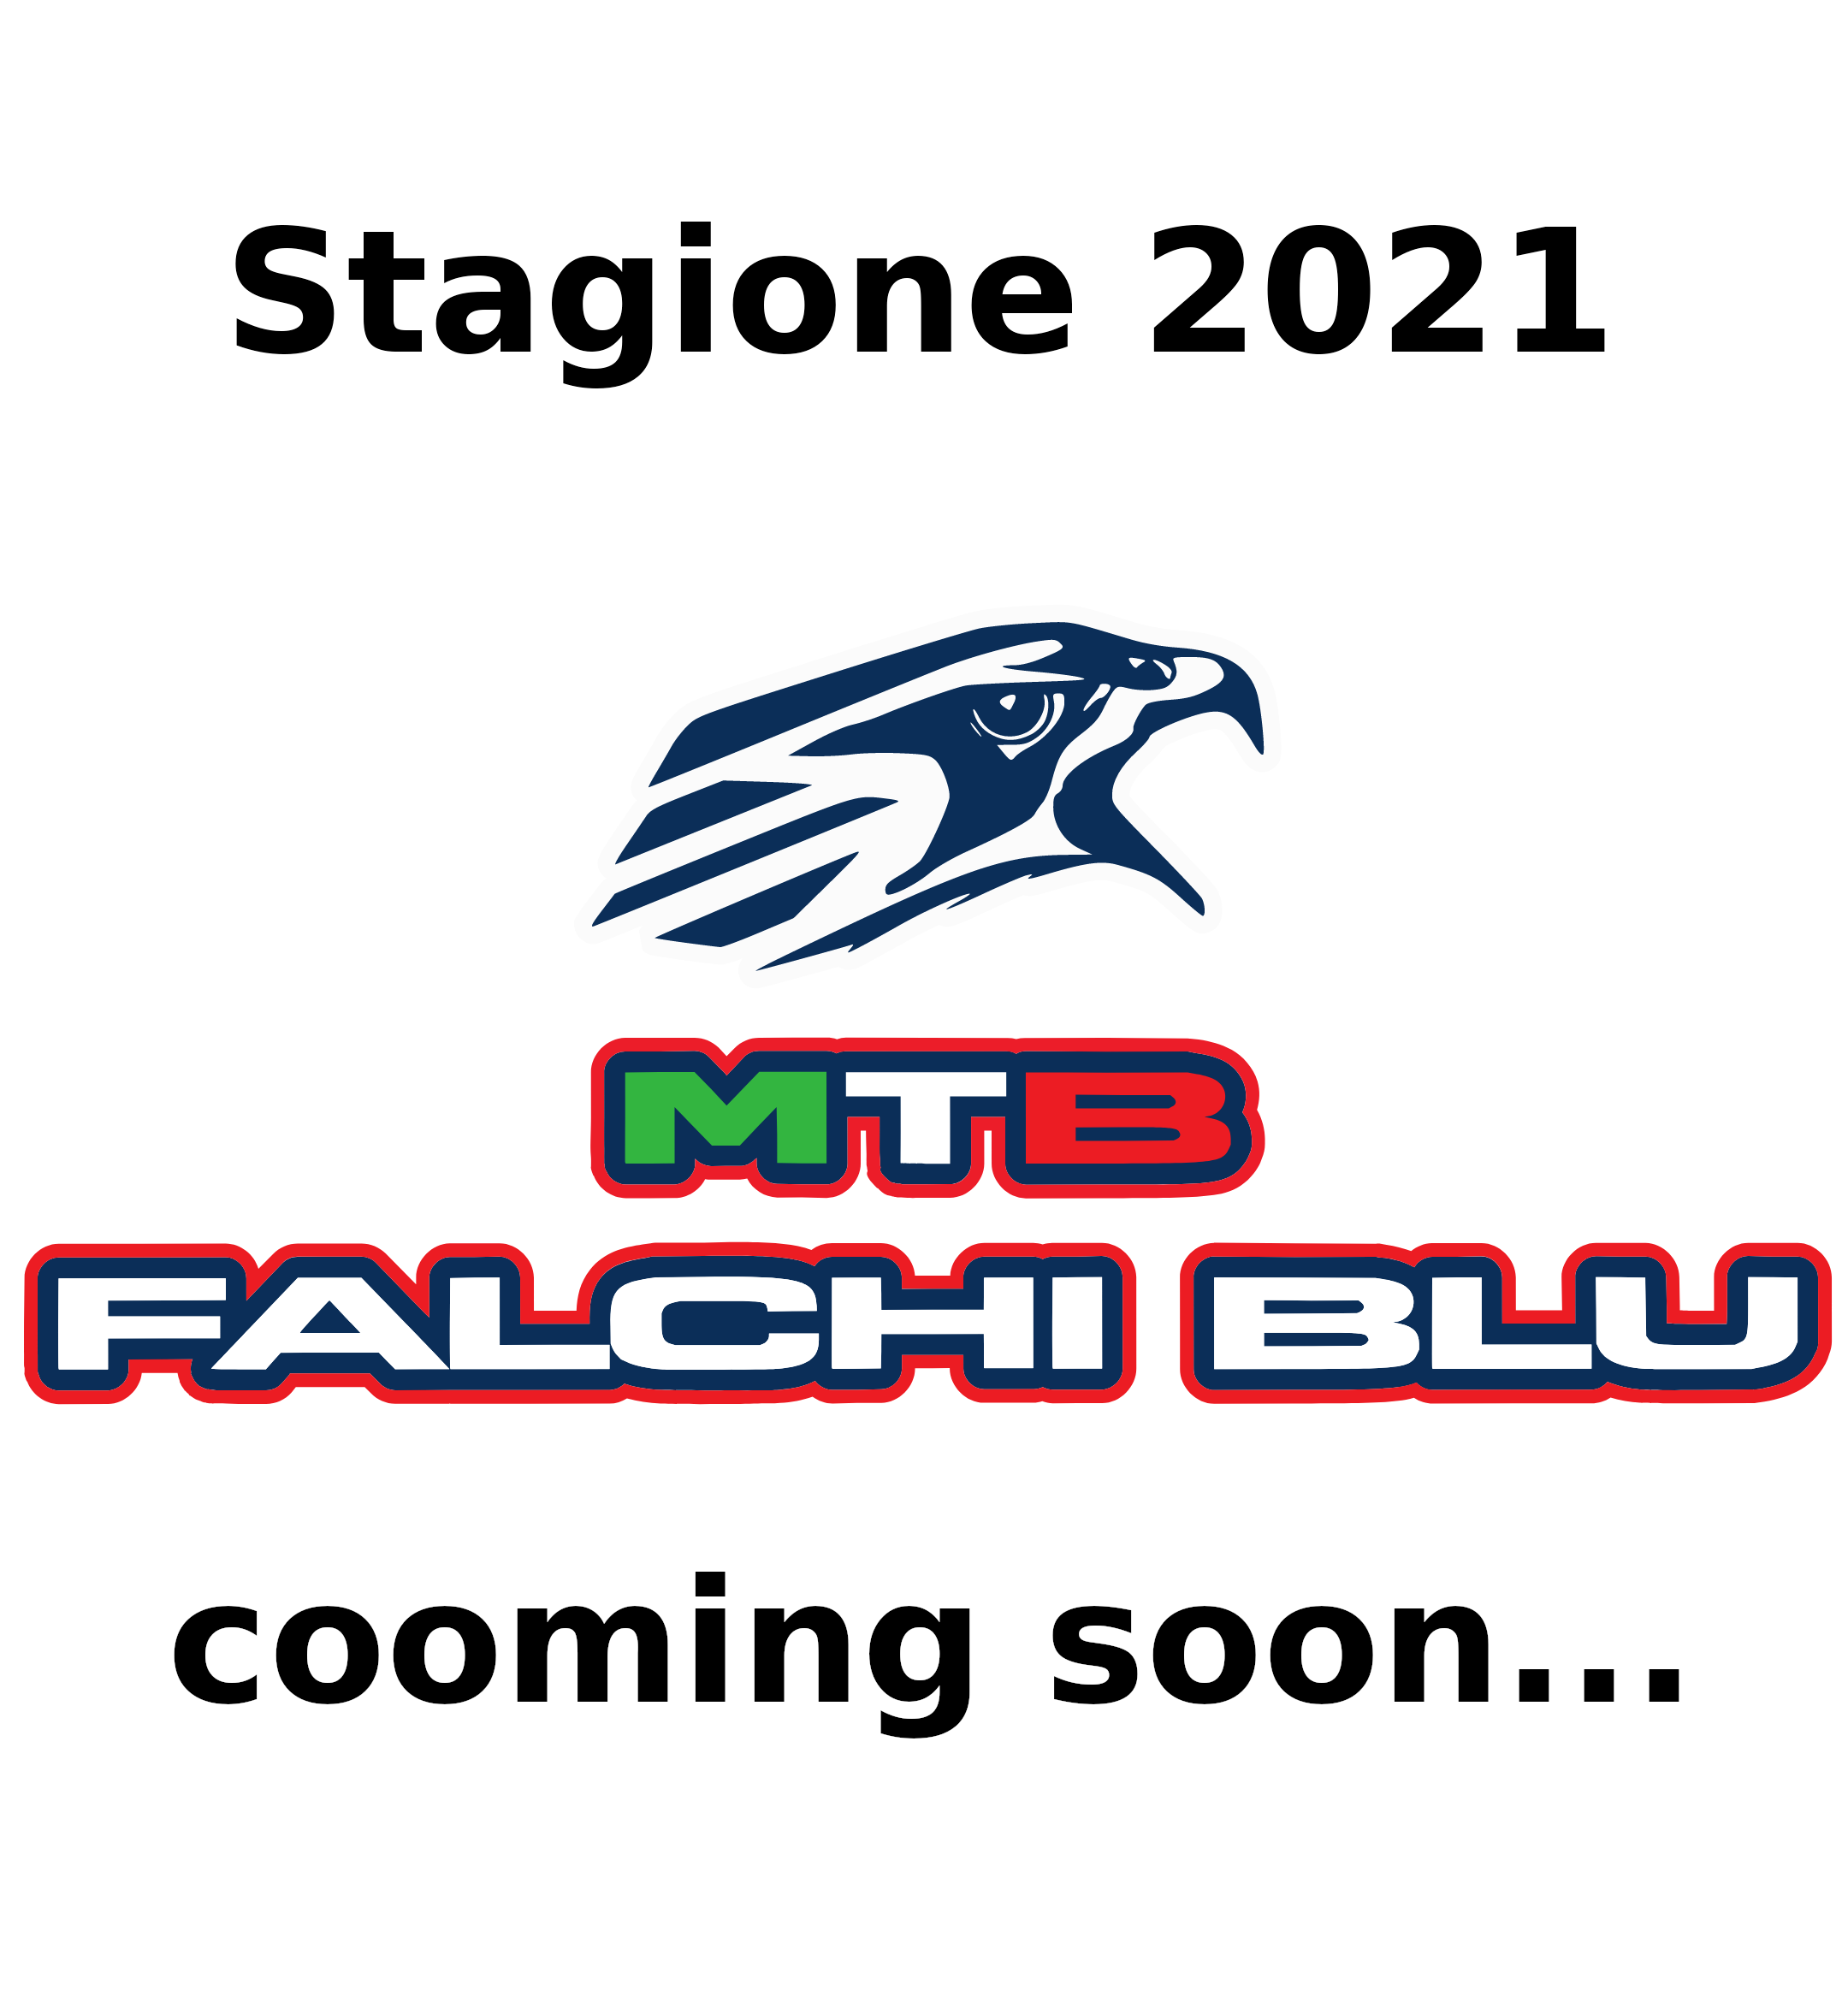 2021 Logo Falchi Blu cooming soon